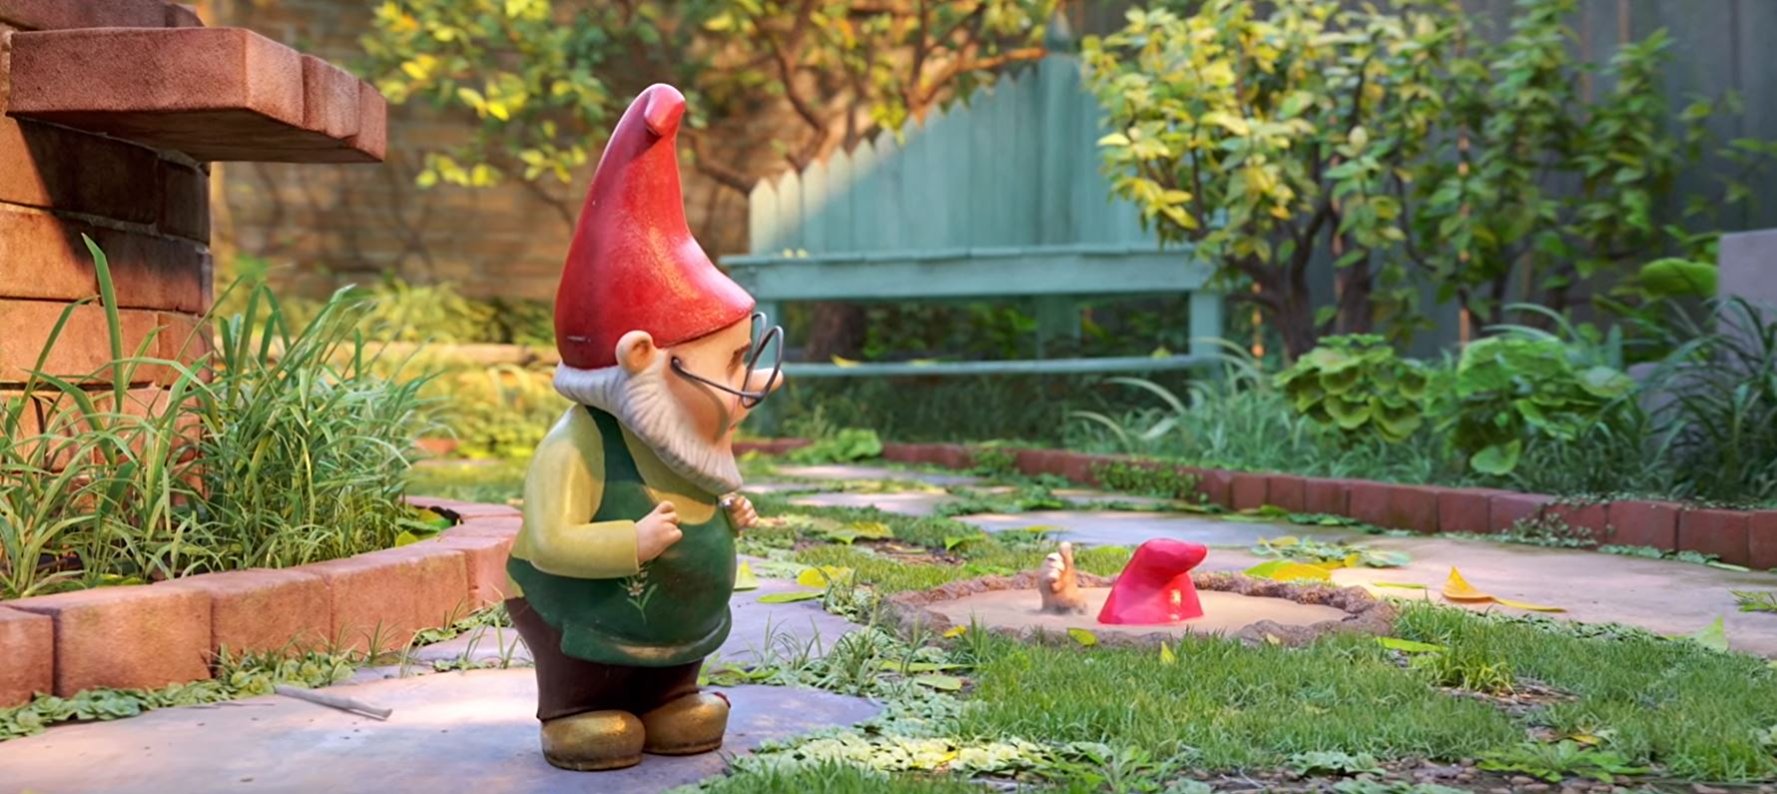 Bajkoranki: Gnomeo i Julia. Tajemnica zaginionych krasnali - dubbing